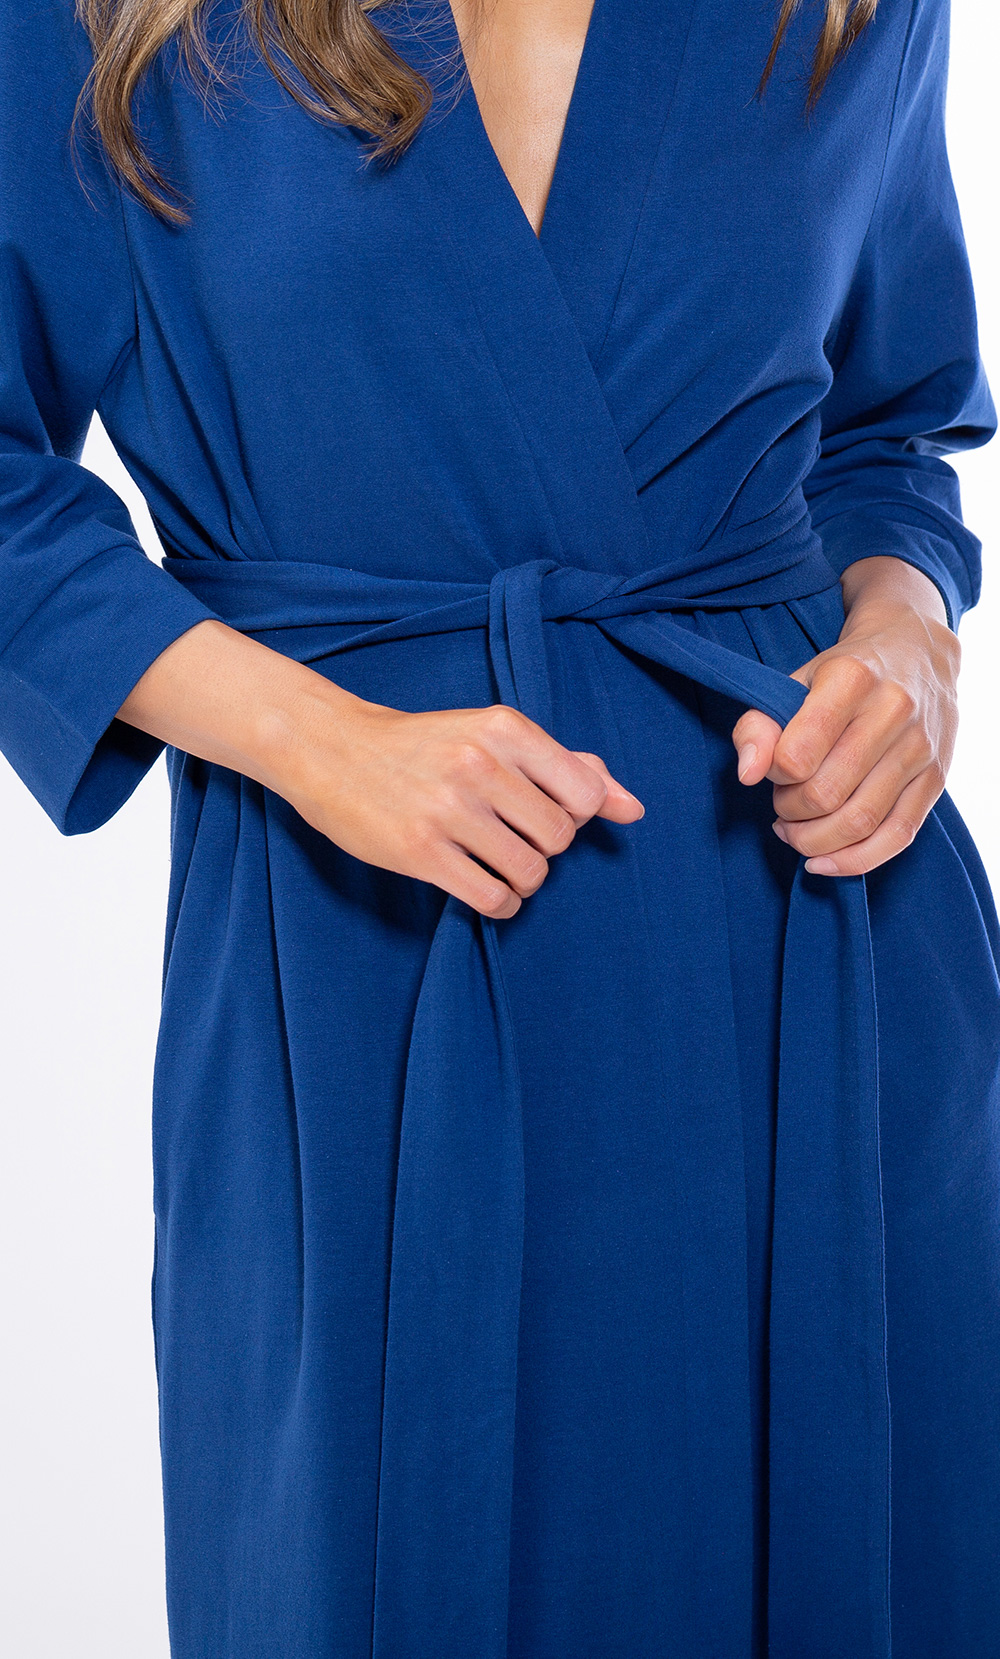 Cotton Navy Blue Knit Kimono Robe-Robemart.com